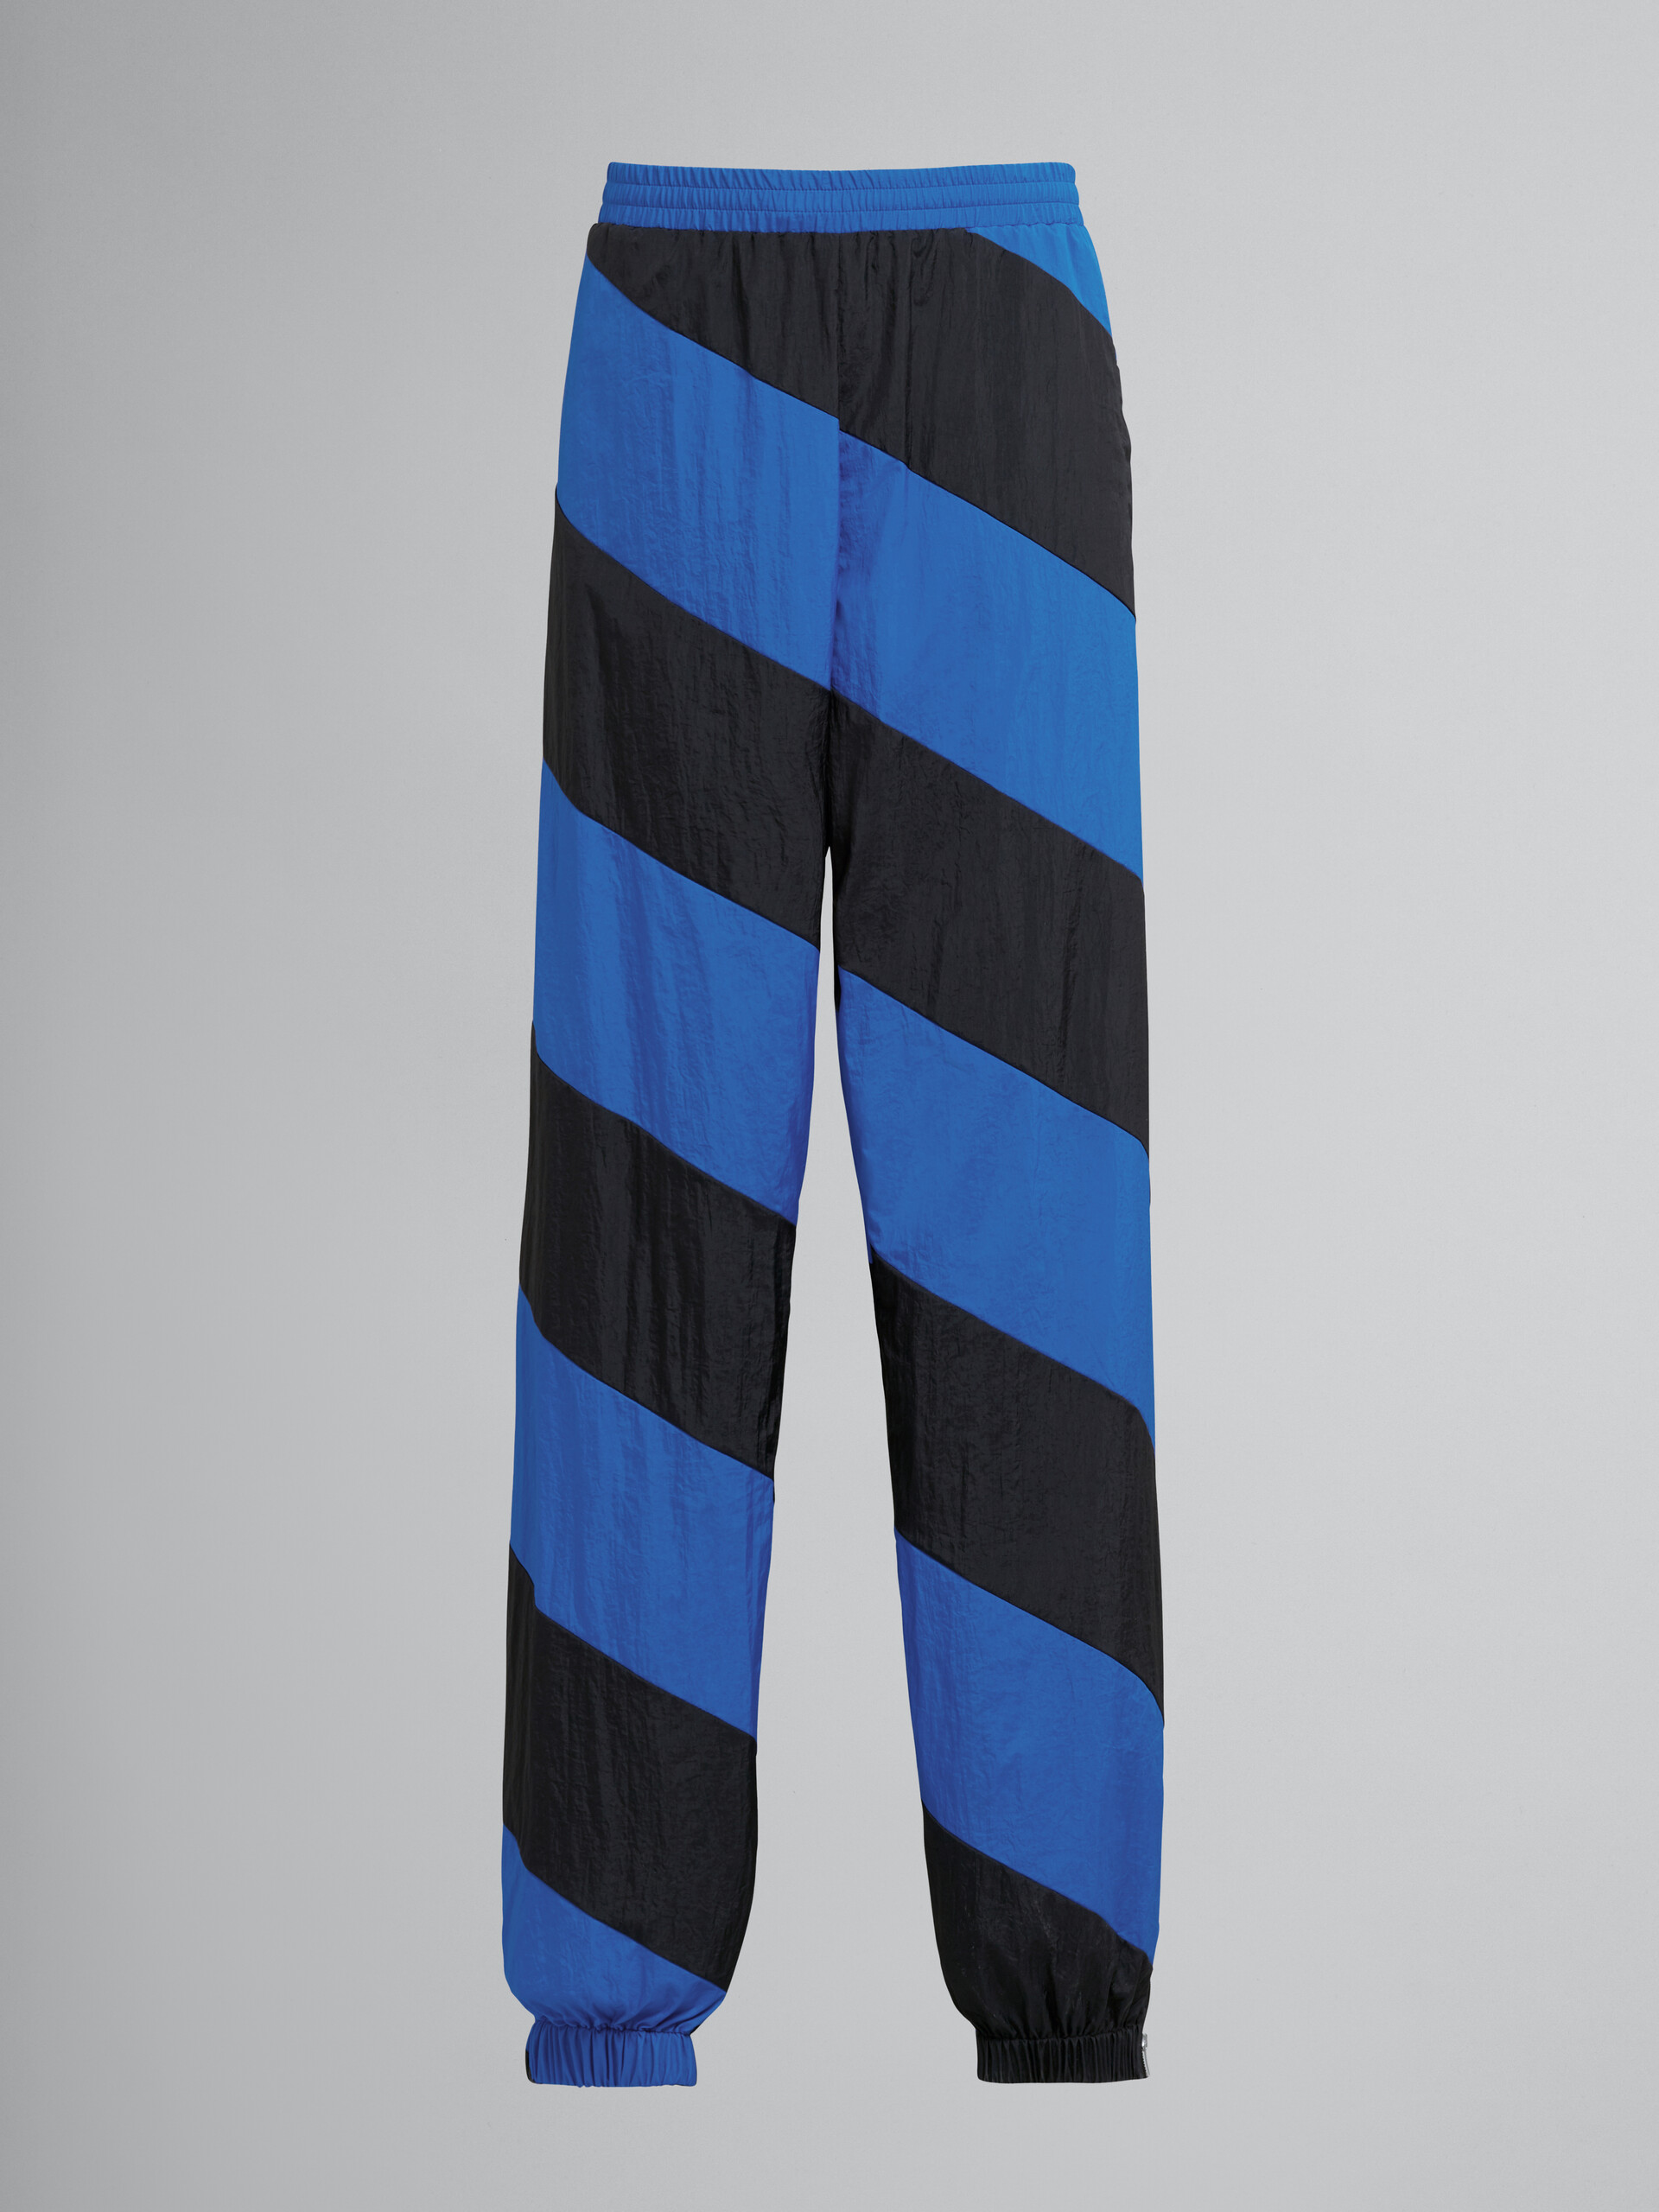 Lightweight crinkled nylon pants - Pants - Image 1